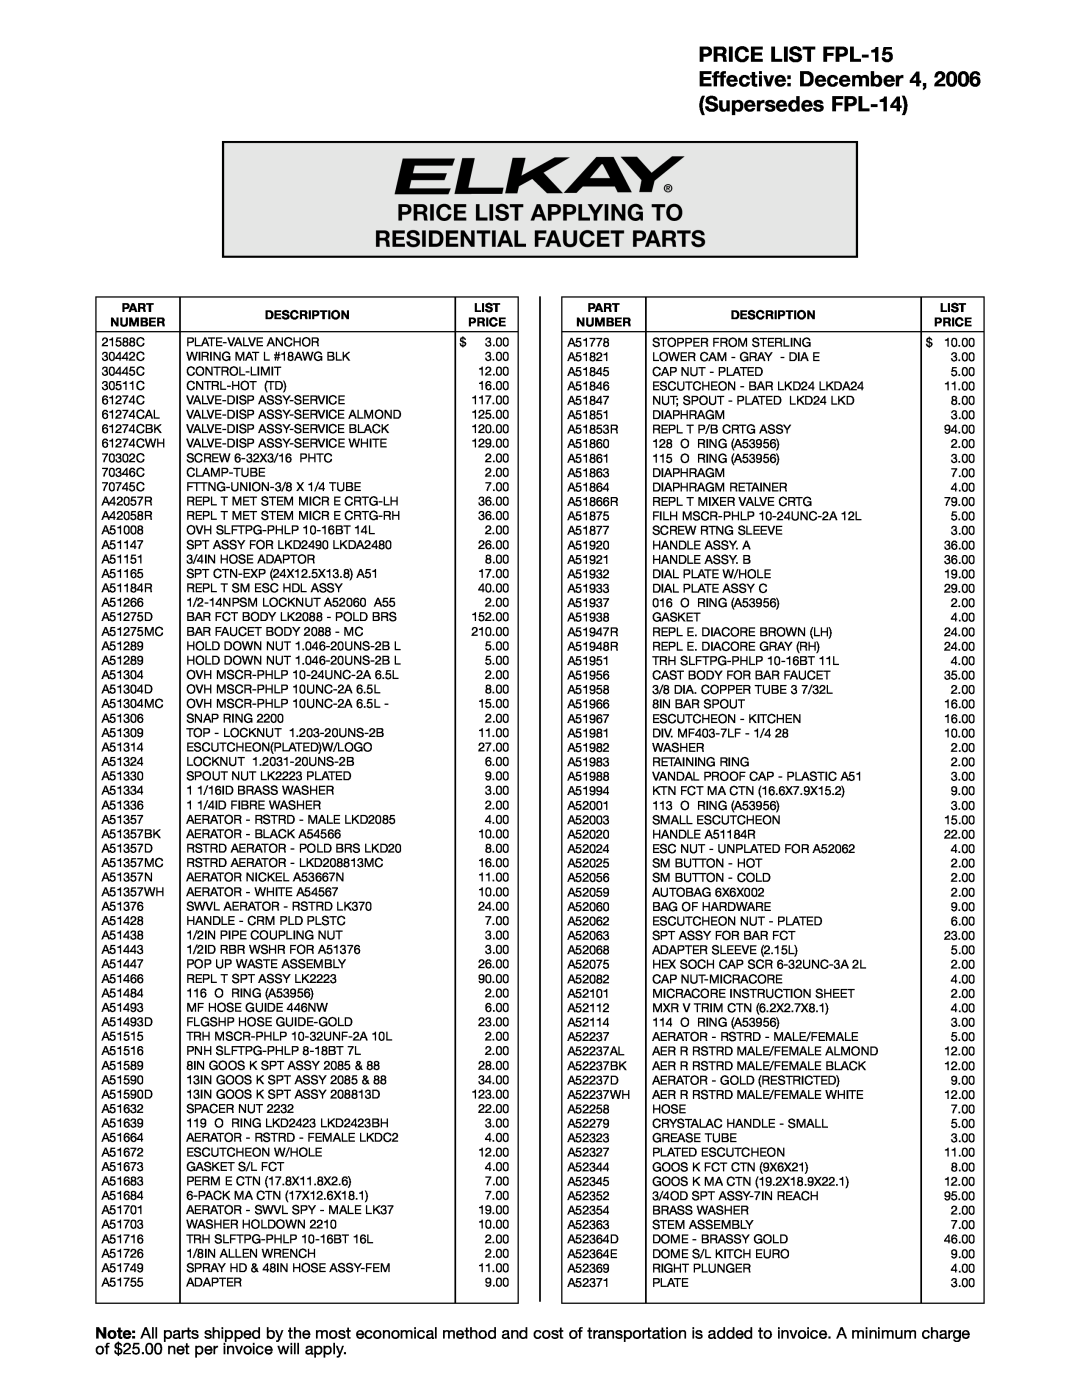 Elkay instruction sheet PRICE LIST FPL-15 Effective December, Supersedes FPL-14, Part, Description, List, Number, Price 